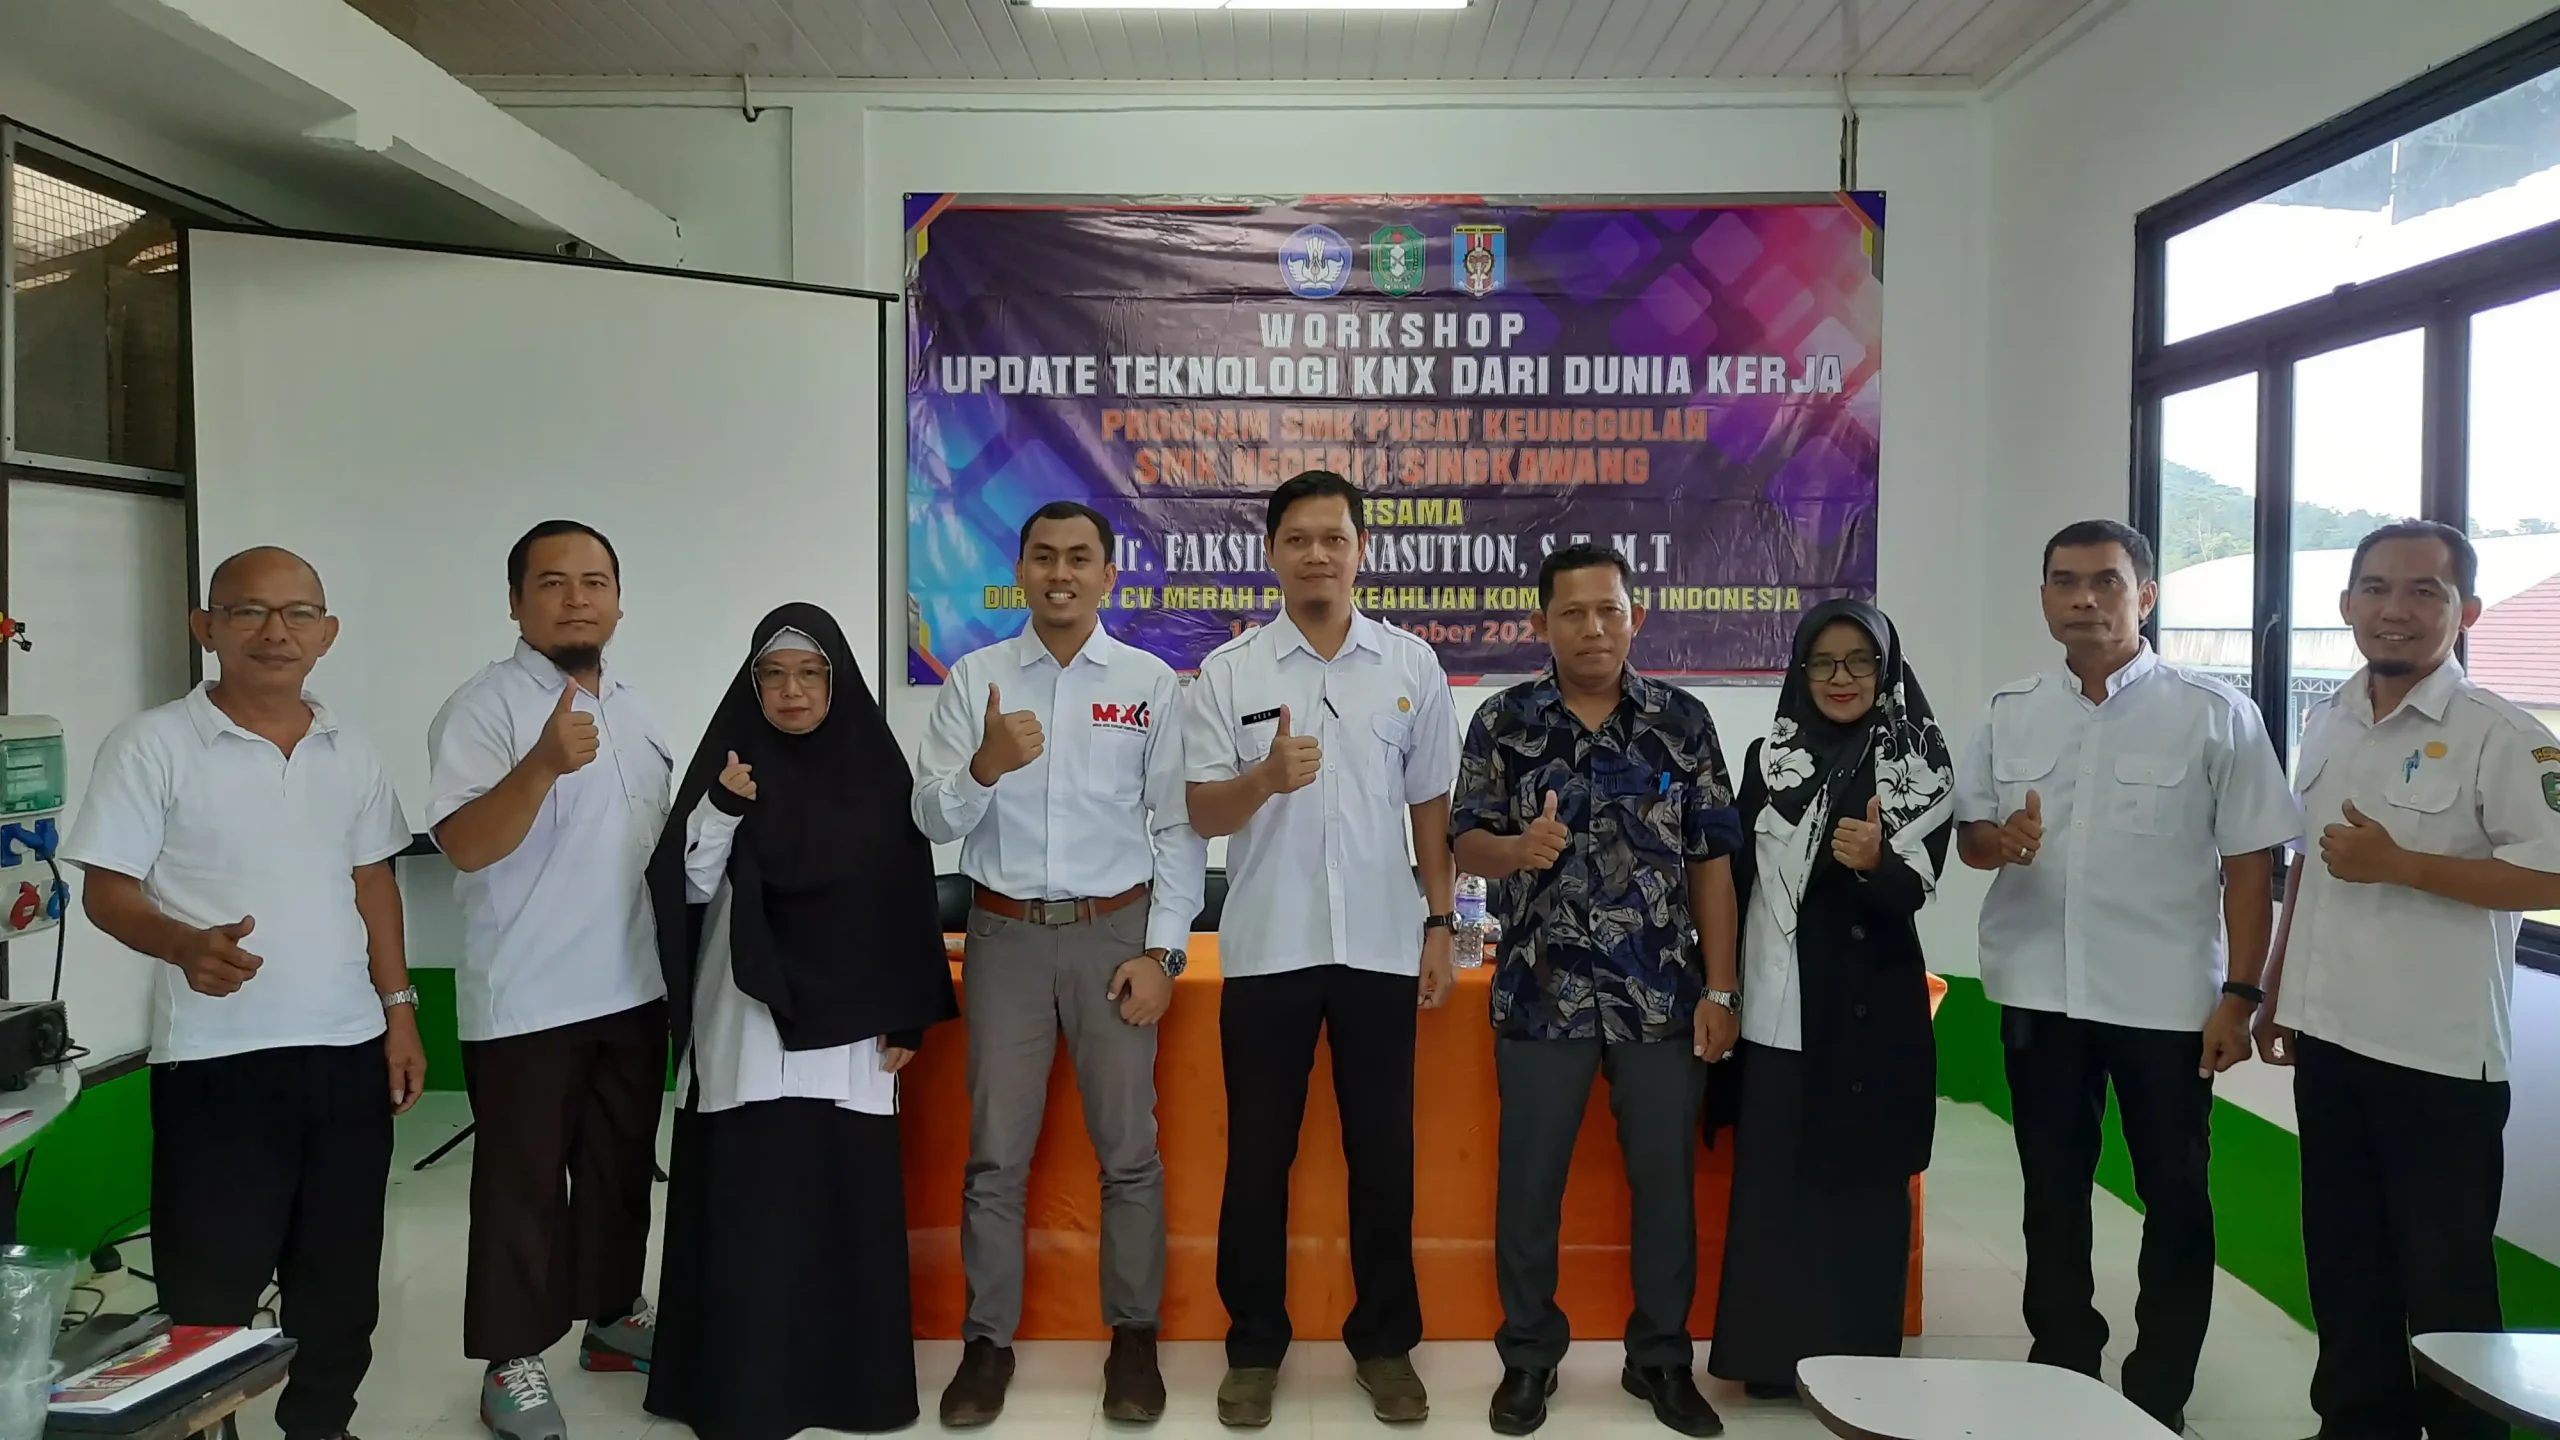 Workshop Update Teknologi KNX SMK Negeri 1 Singkawang